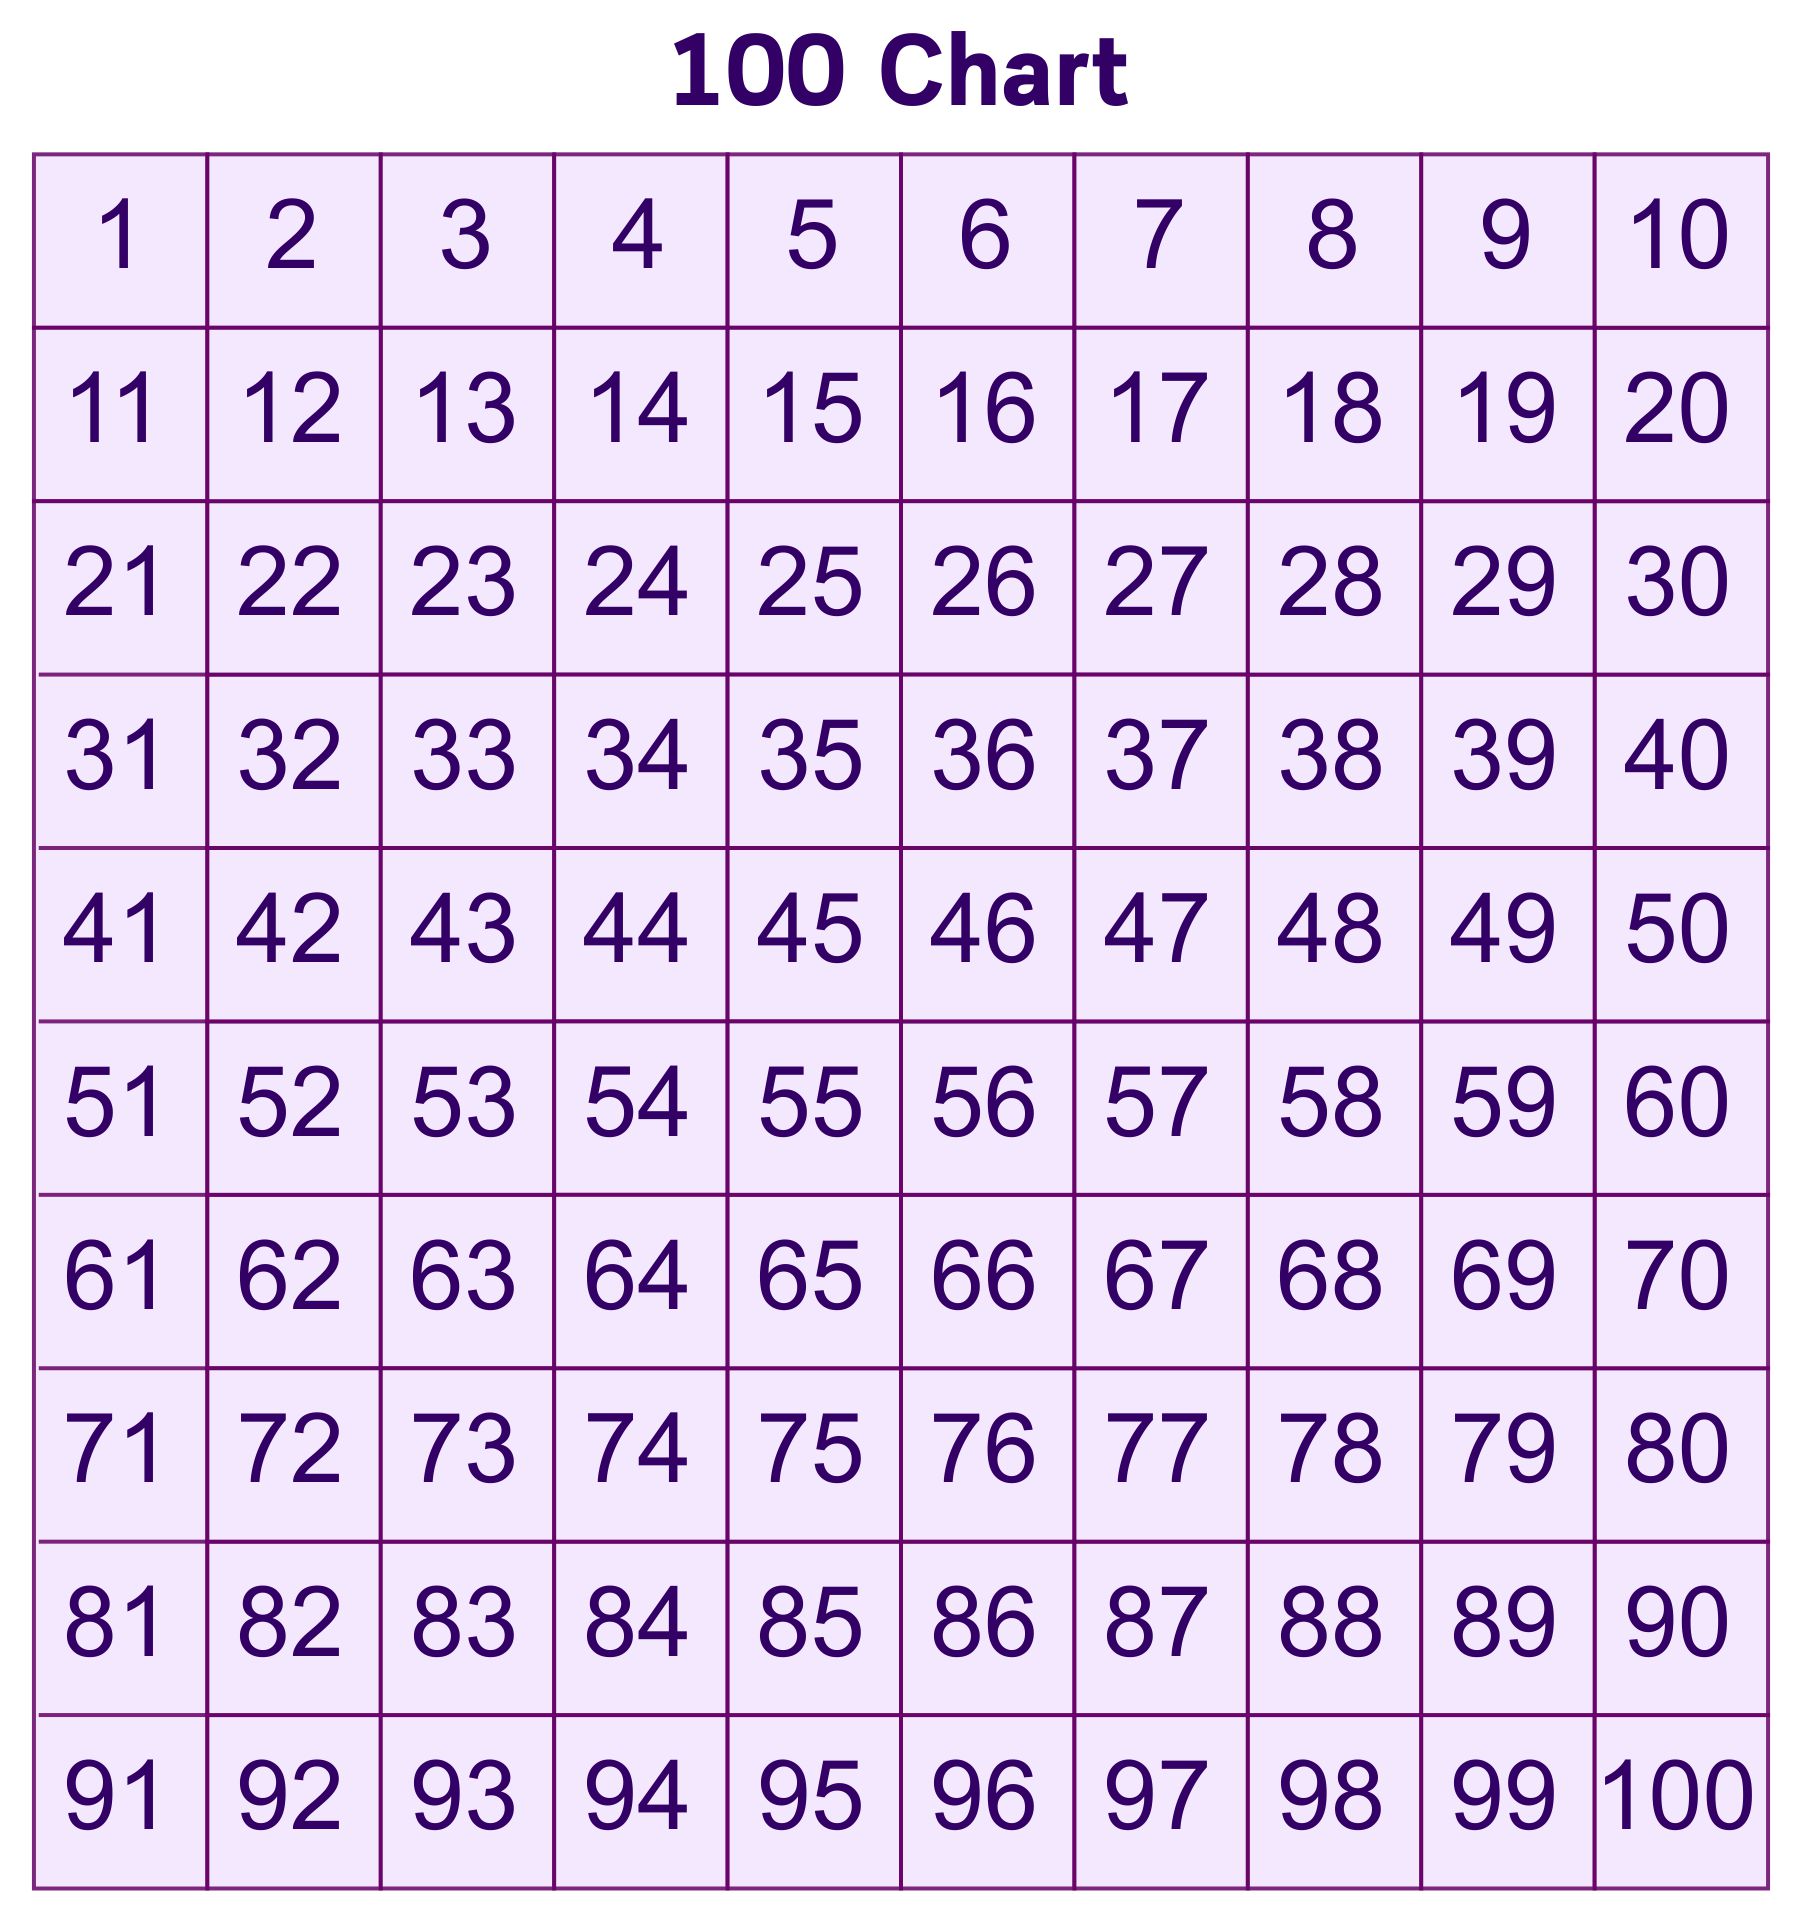 Free Printable Hundred Number Chart Printable Templates